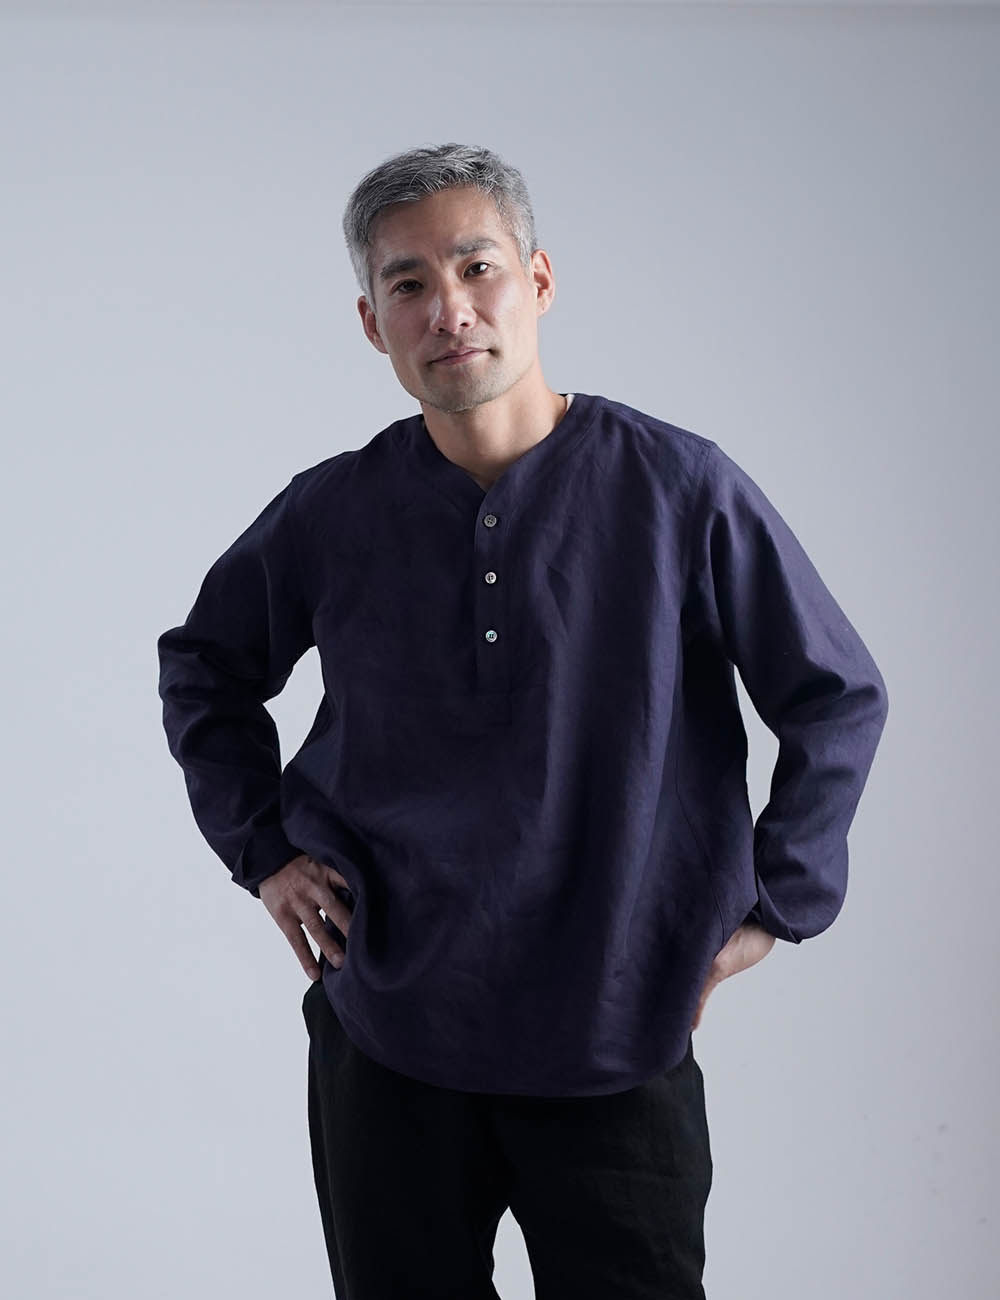 Linen Shirt　超高密度リネン スリーピングシャツ 男女兼用/黒紅色(くろべにいろ) t030d-kbi1